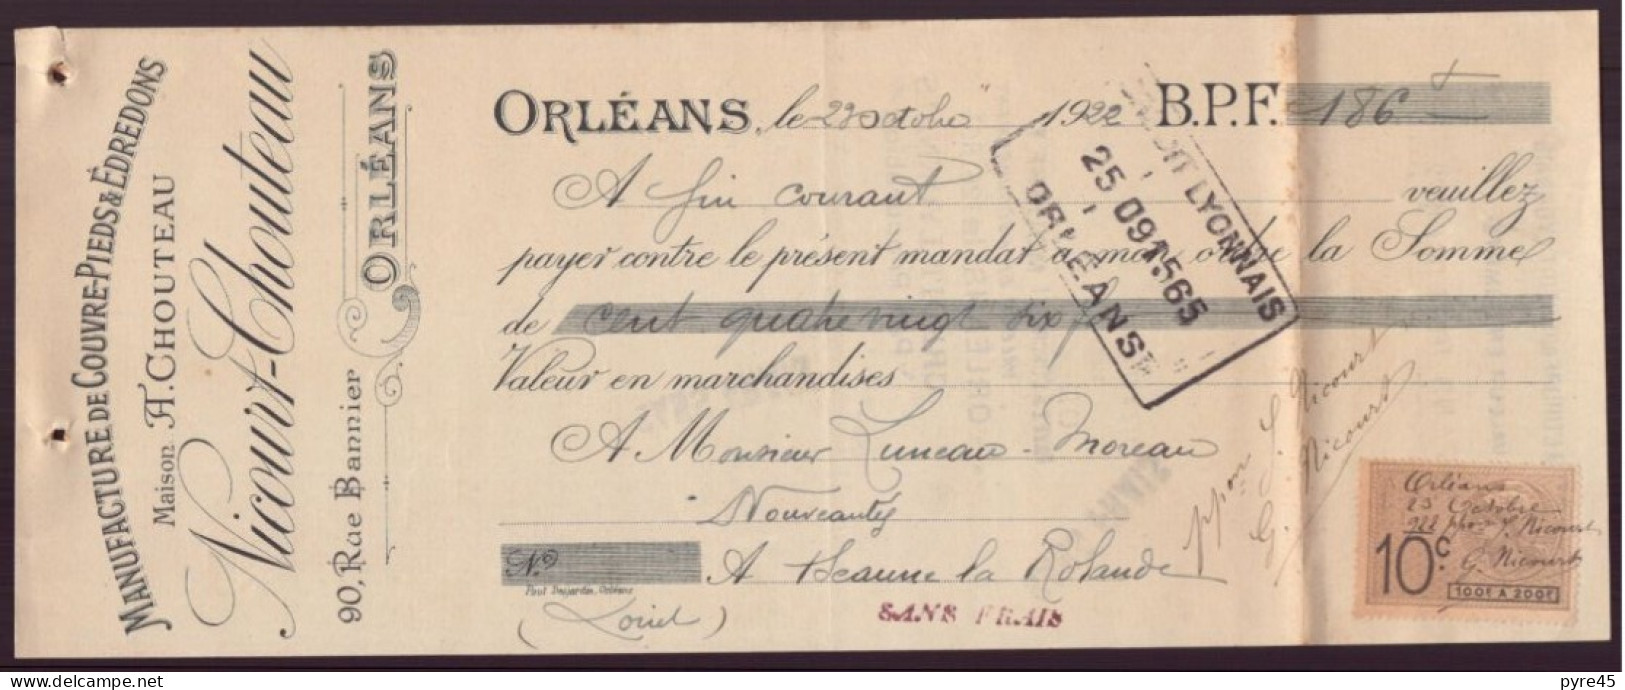 CHEQUE DU 29 / 10 / 1922 MANUFACTURE DE COUVRE PIEDS & EDREDONS A ORLEANS - Cheques En Traveller's Cheques